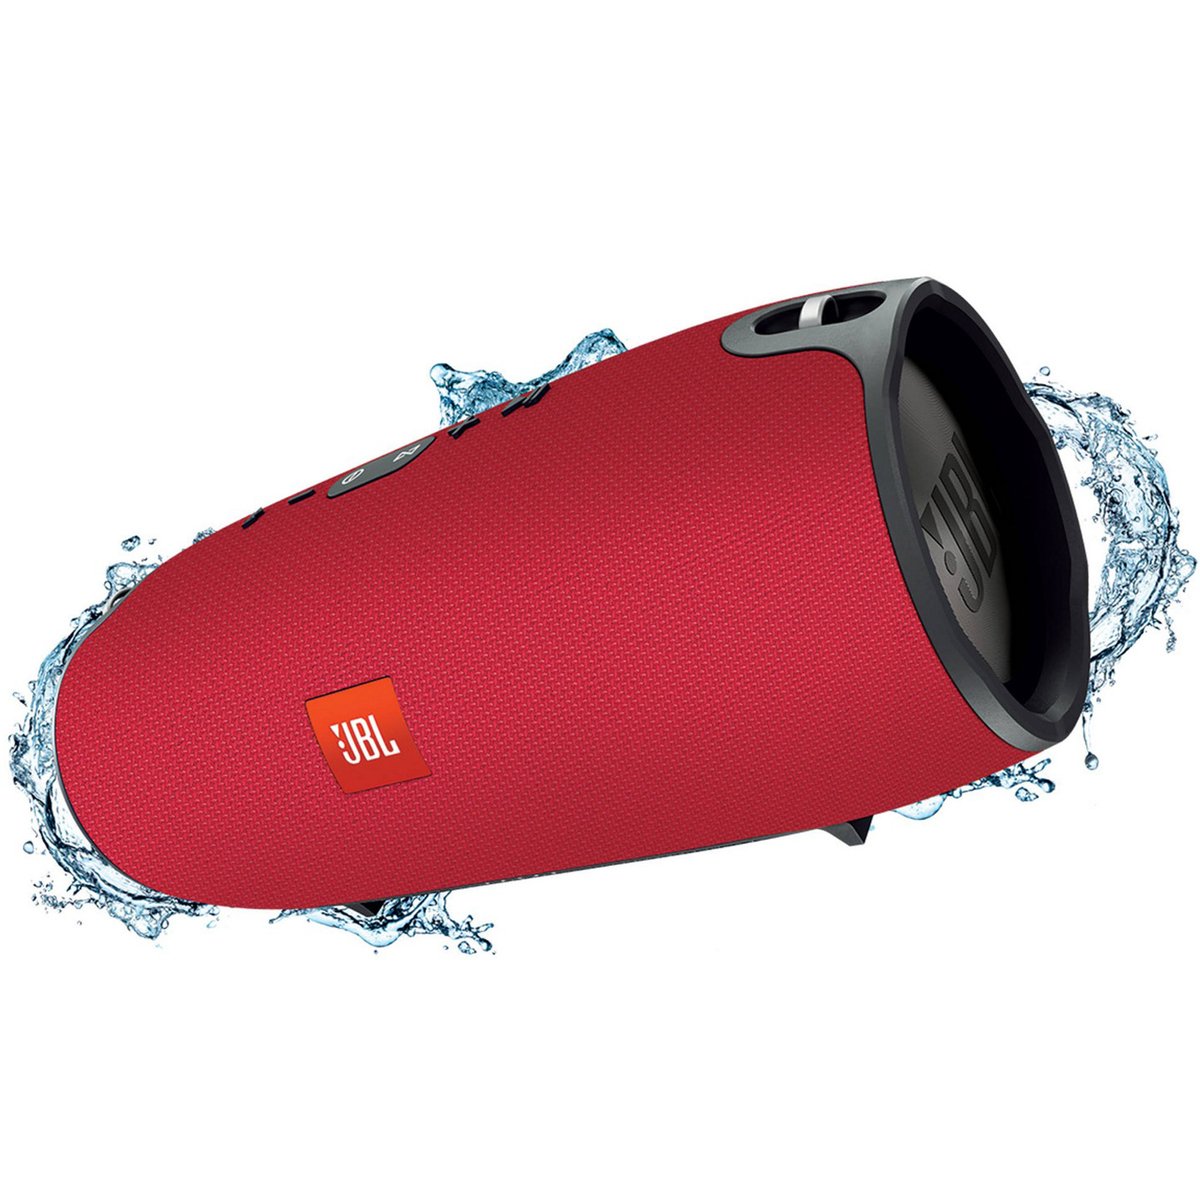 JBL Portable Bluetooth Speaker Xtreme Red